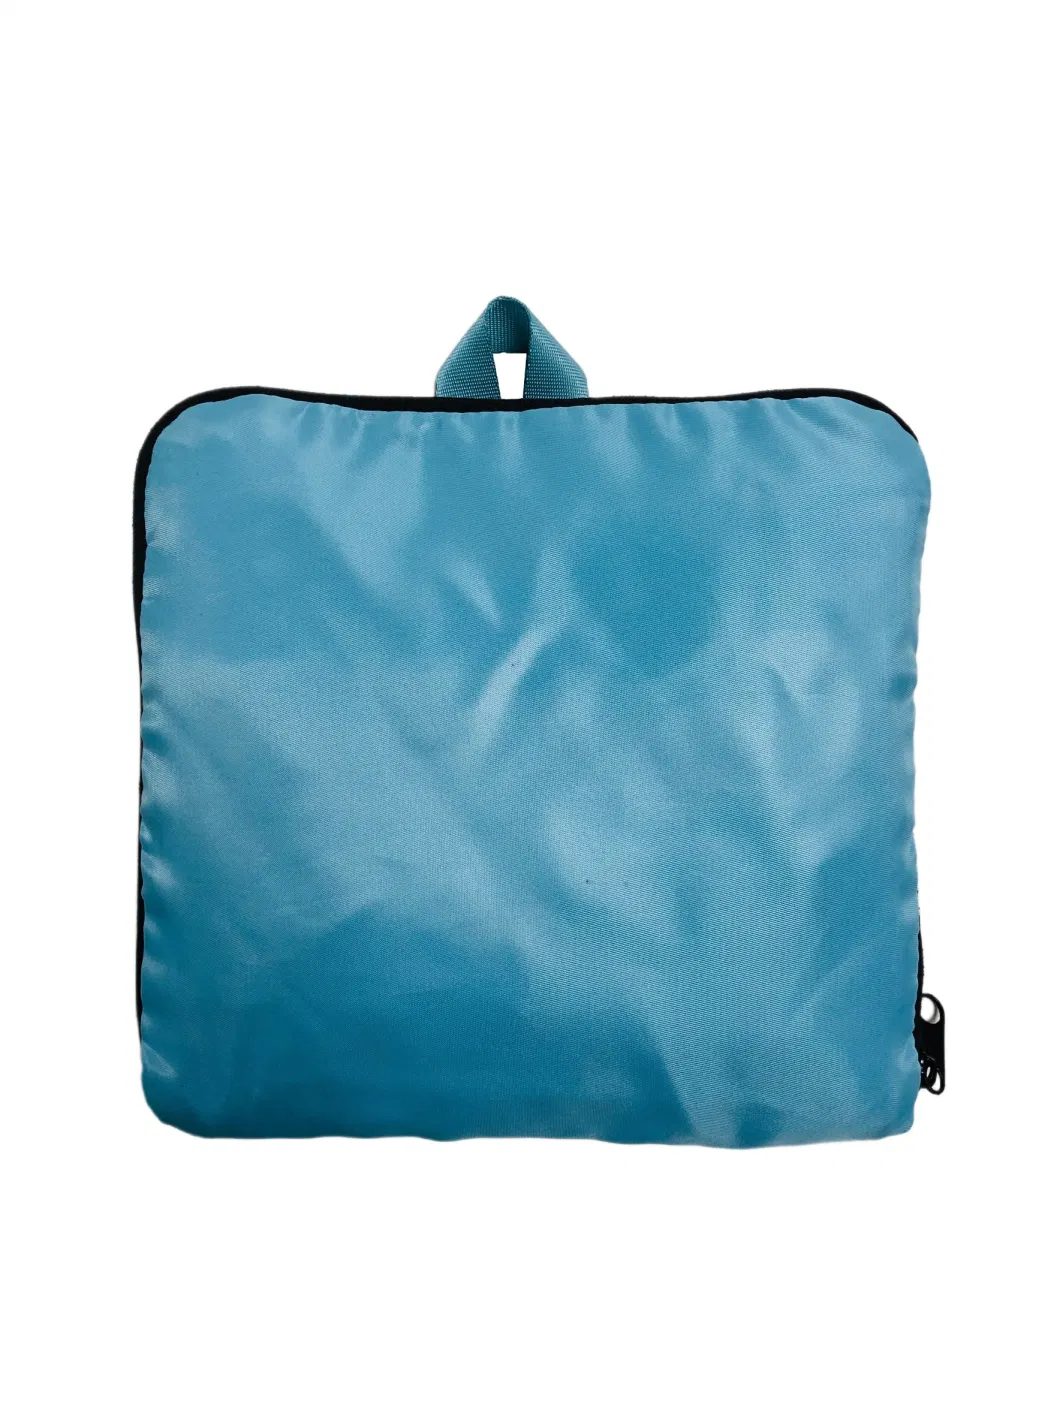 Portabledustproof for Travel Sports, Foldable Duffel Bag, Multiple Colors, Menwomen